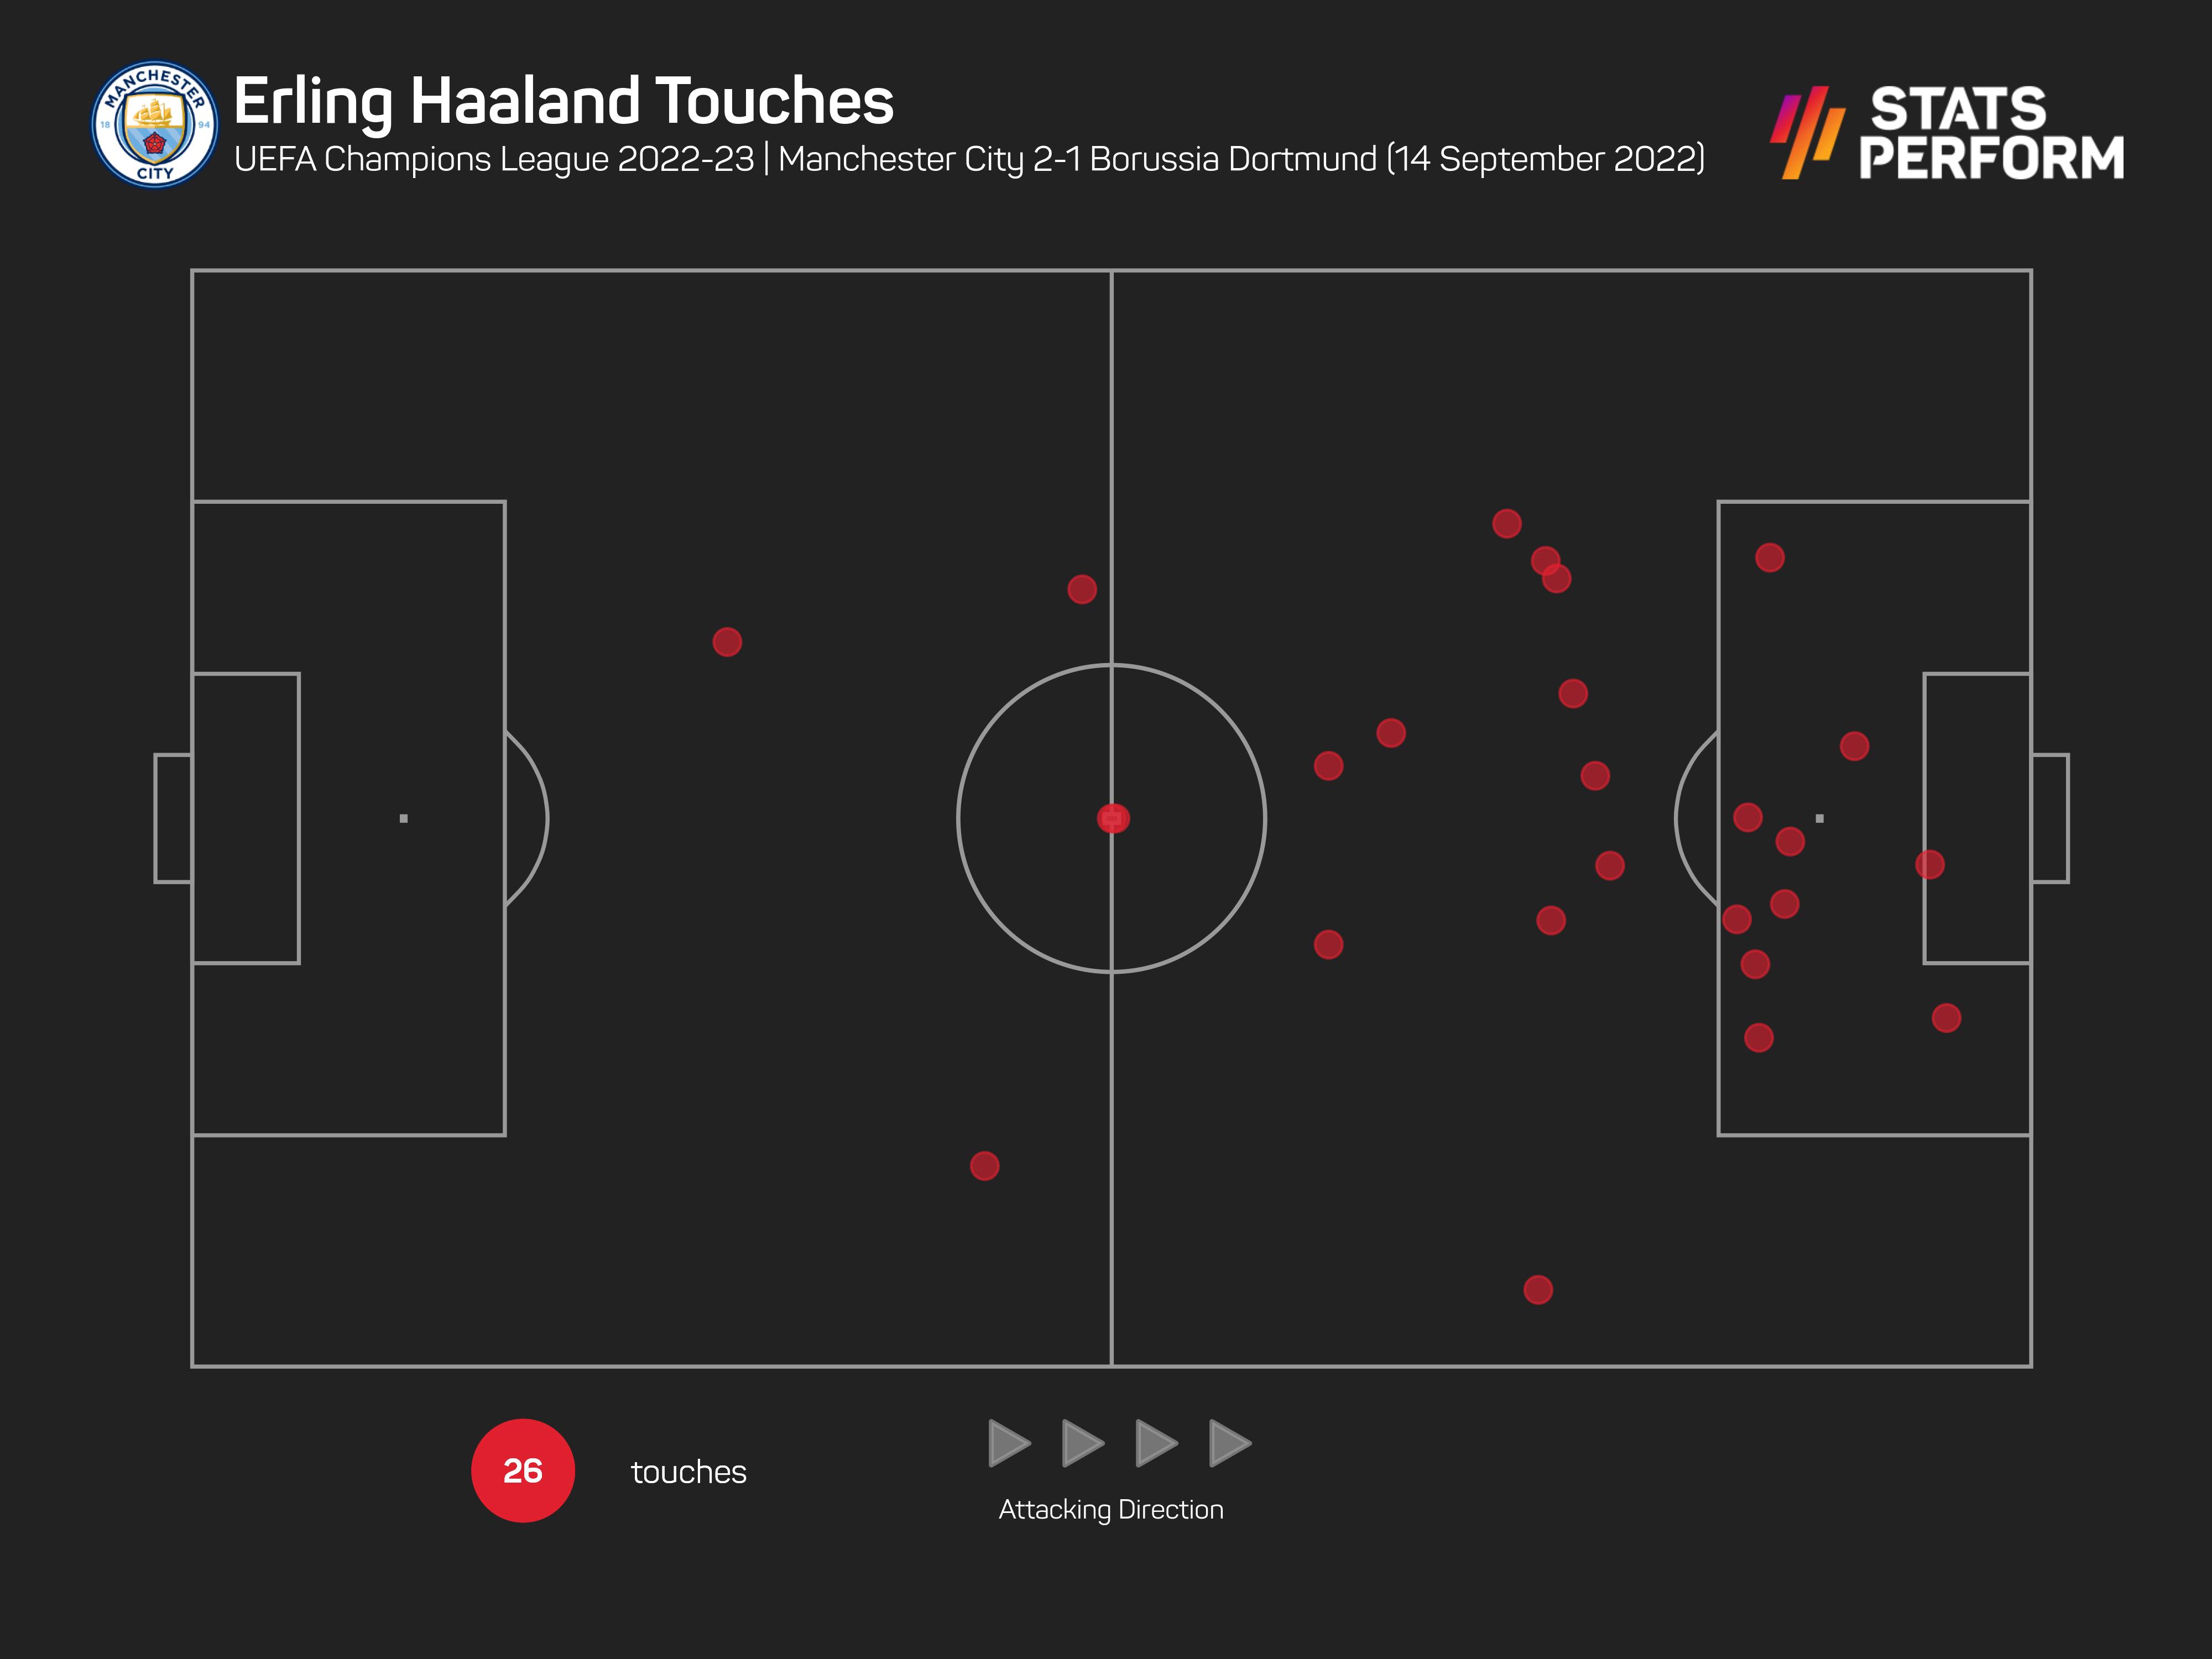 Erling Haaland's 26 touches against Borussia Dortmund